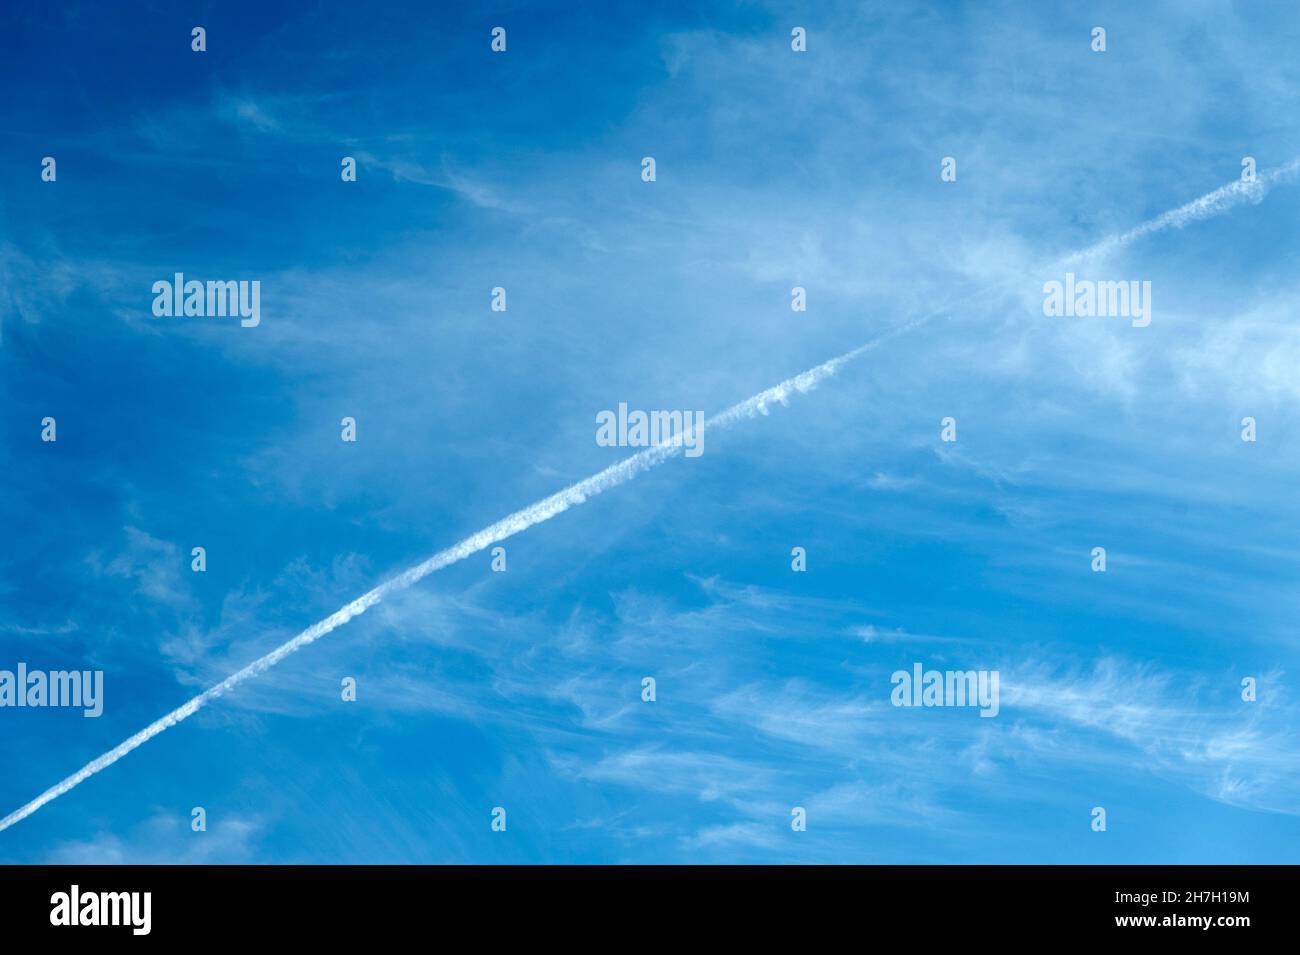 Airplane smoke in cloudy blue sky.Stock photo. Stock Photo